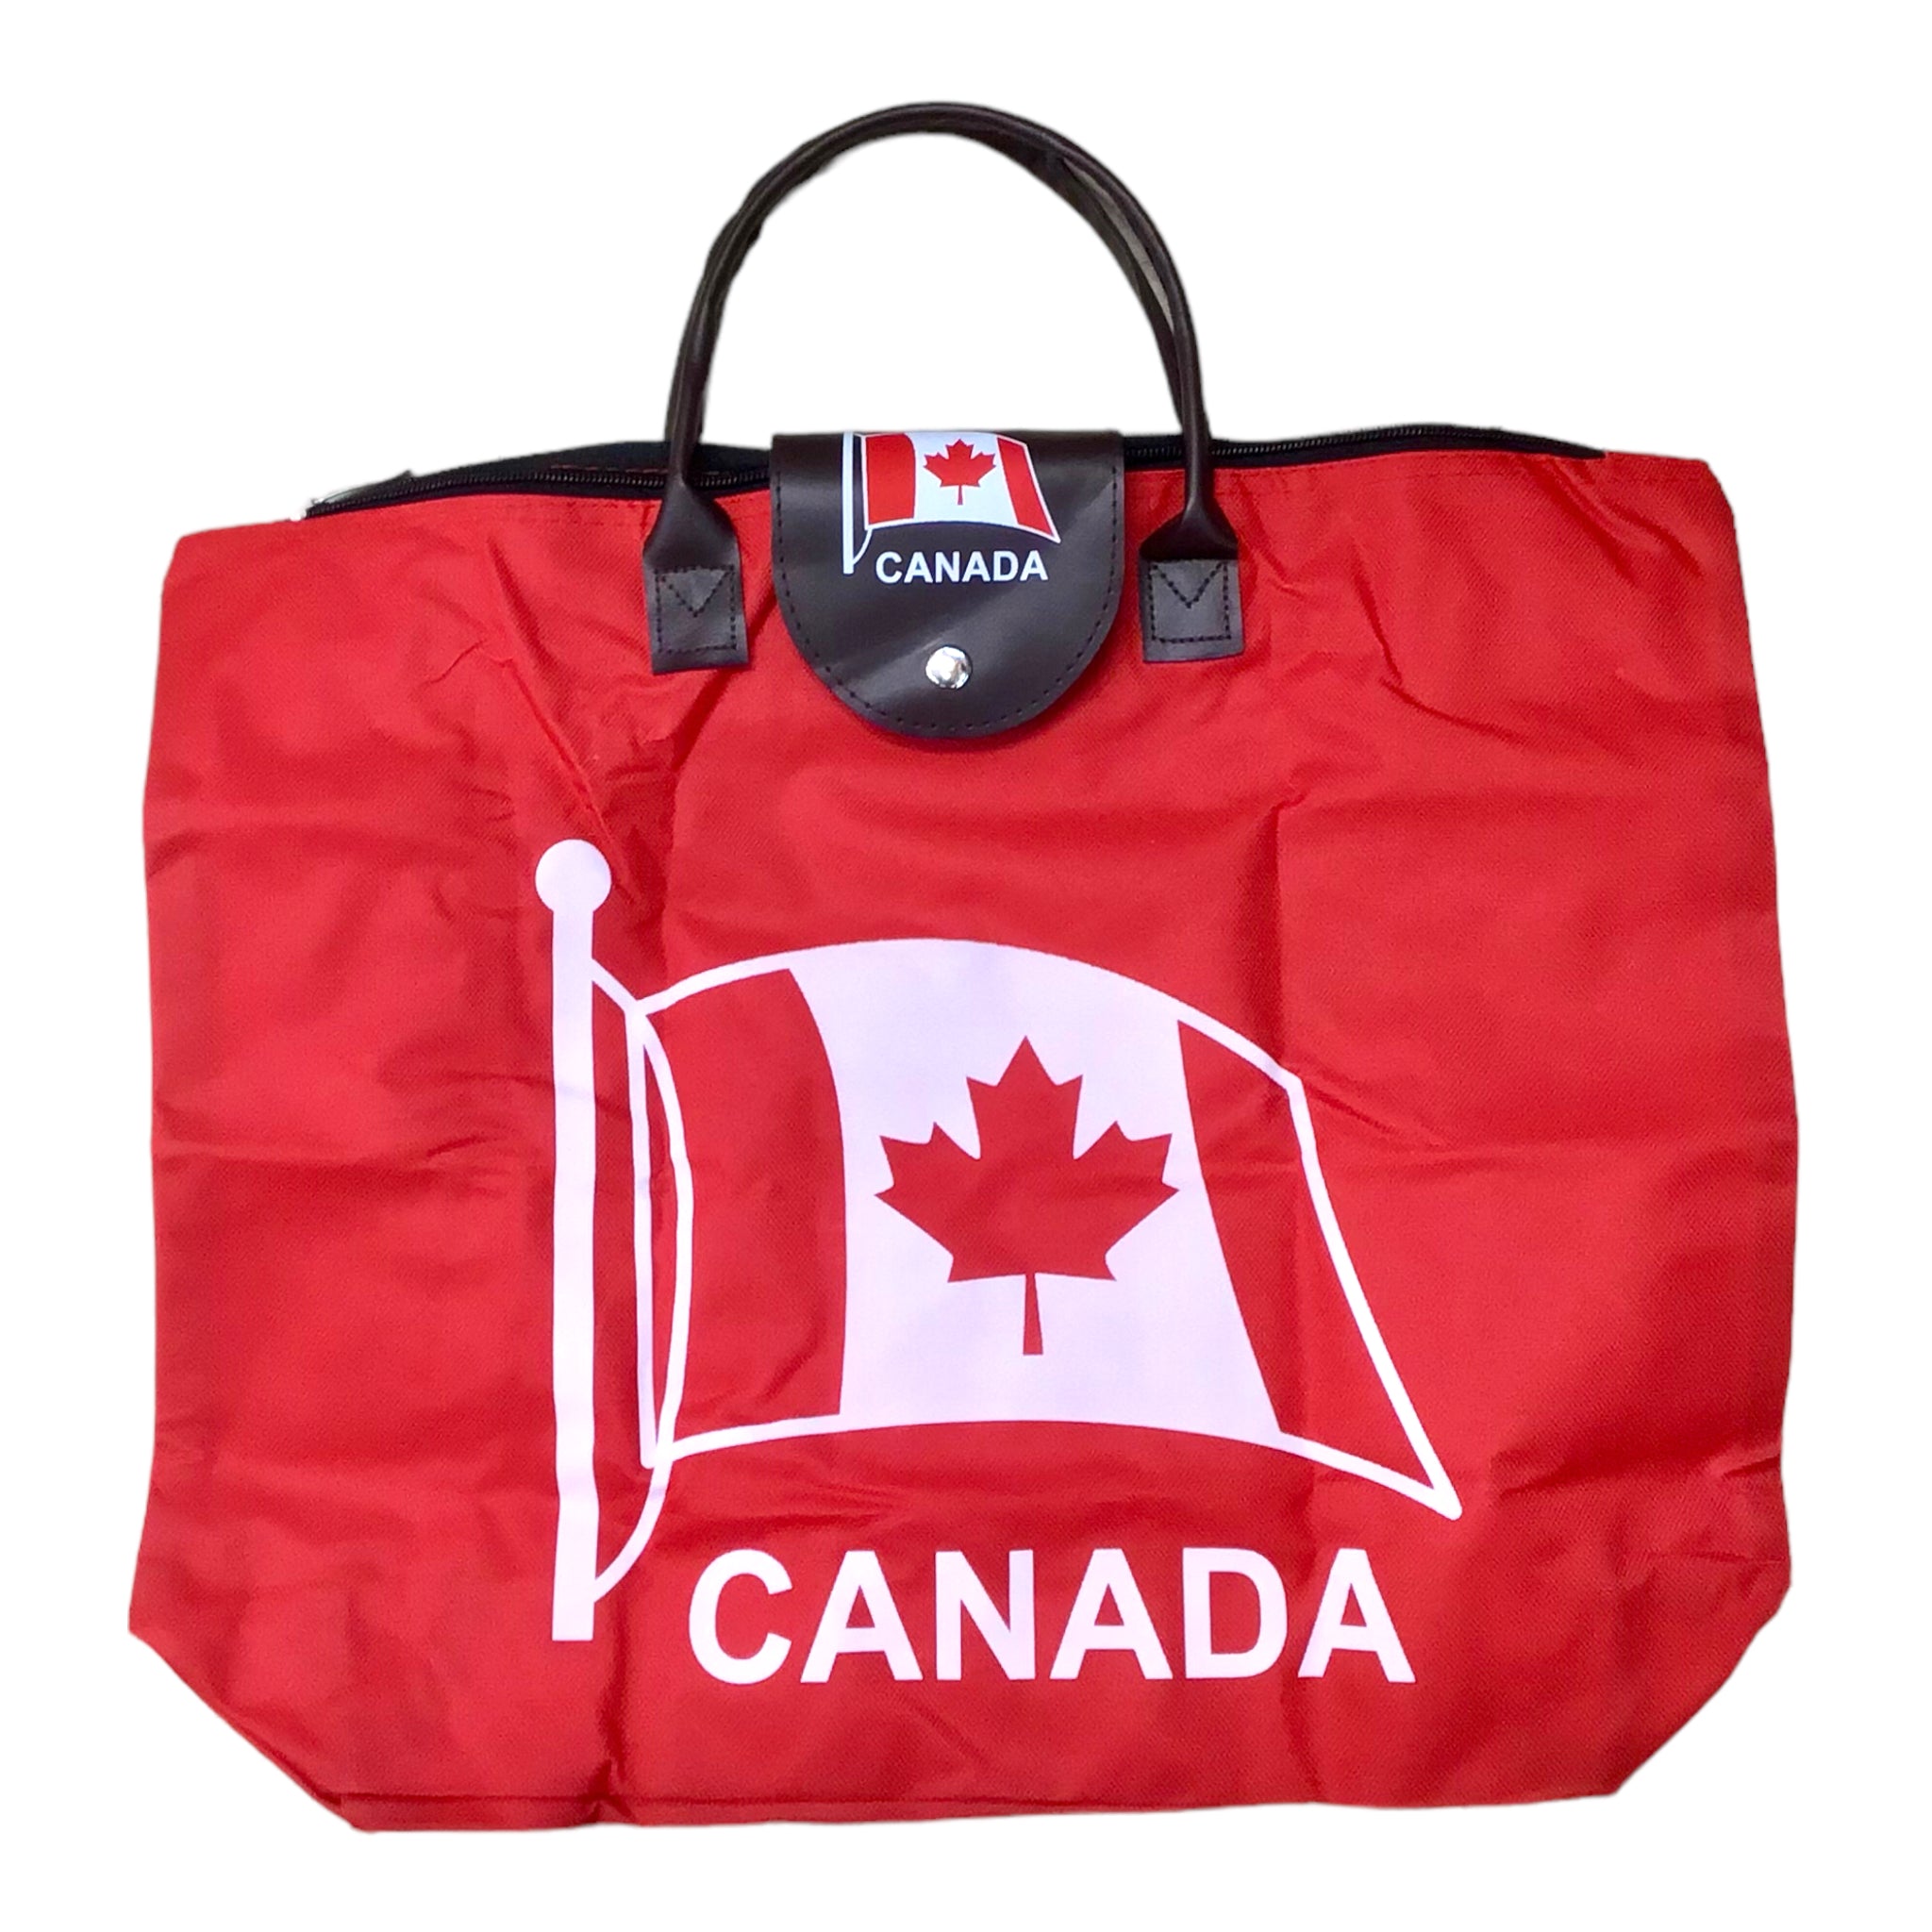 CANADA SOUVENIR FOLDING SHOPPING BAG W/ FAUX LEATHER HANDLES